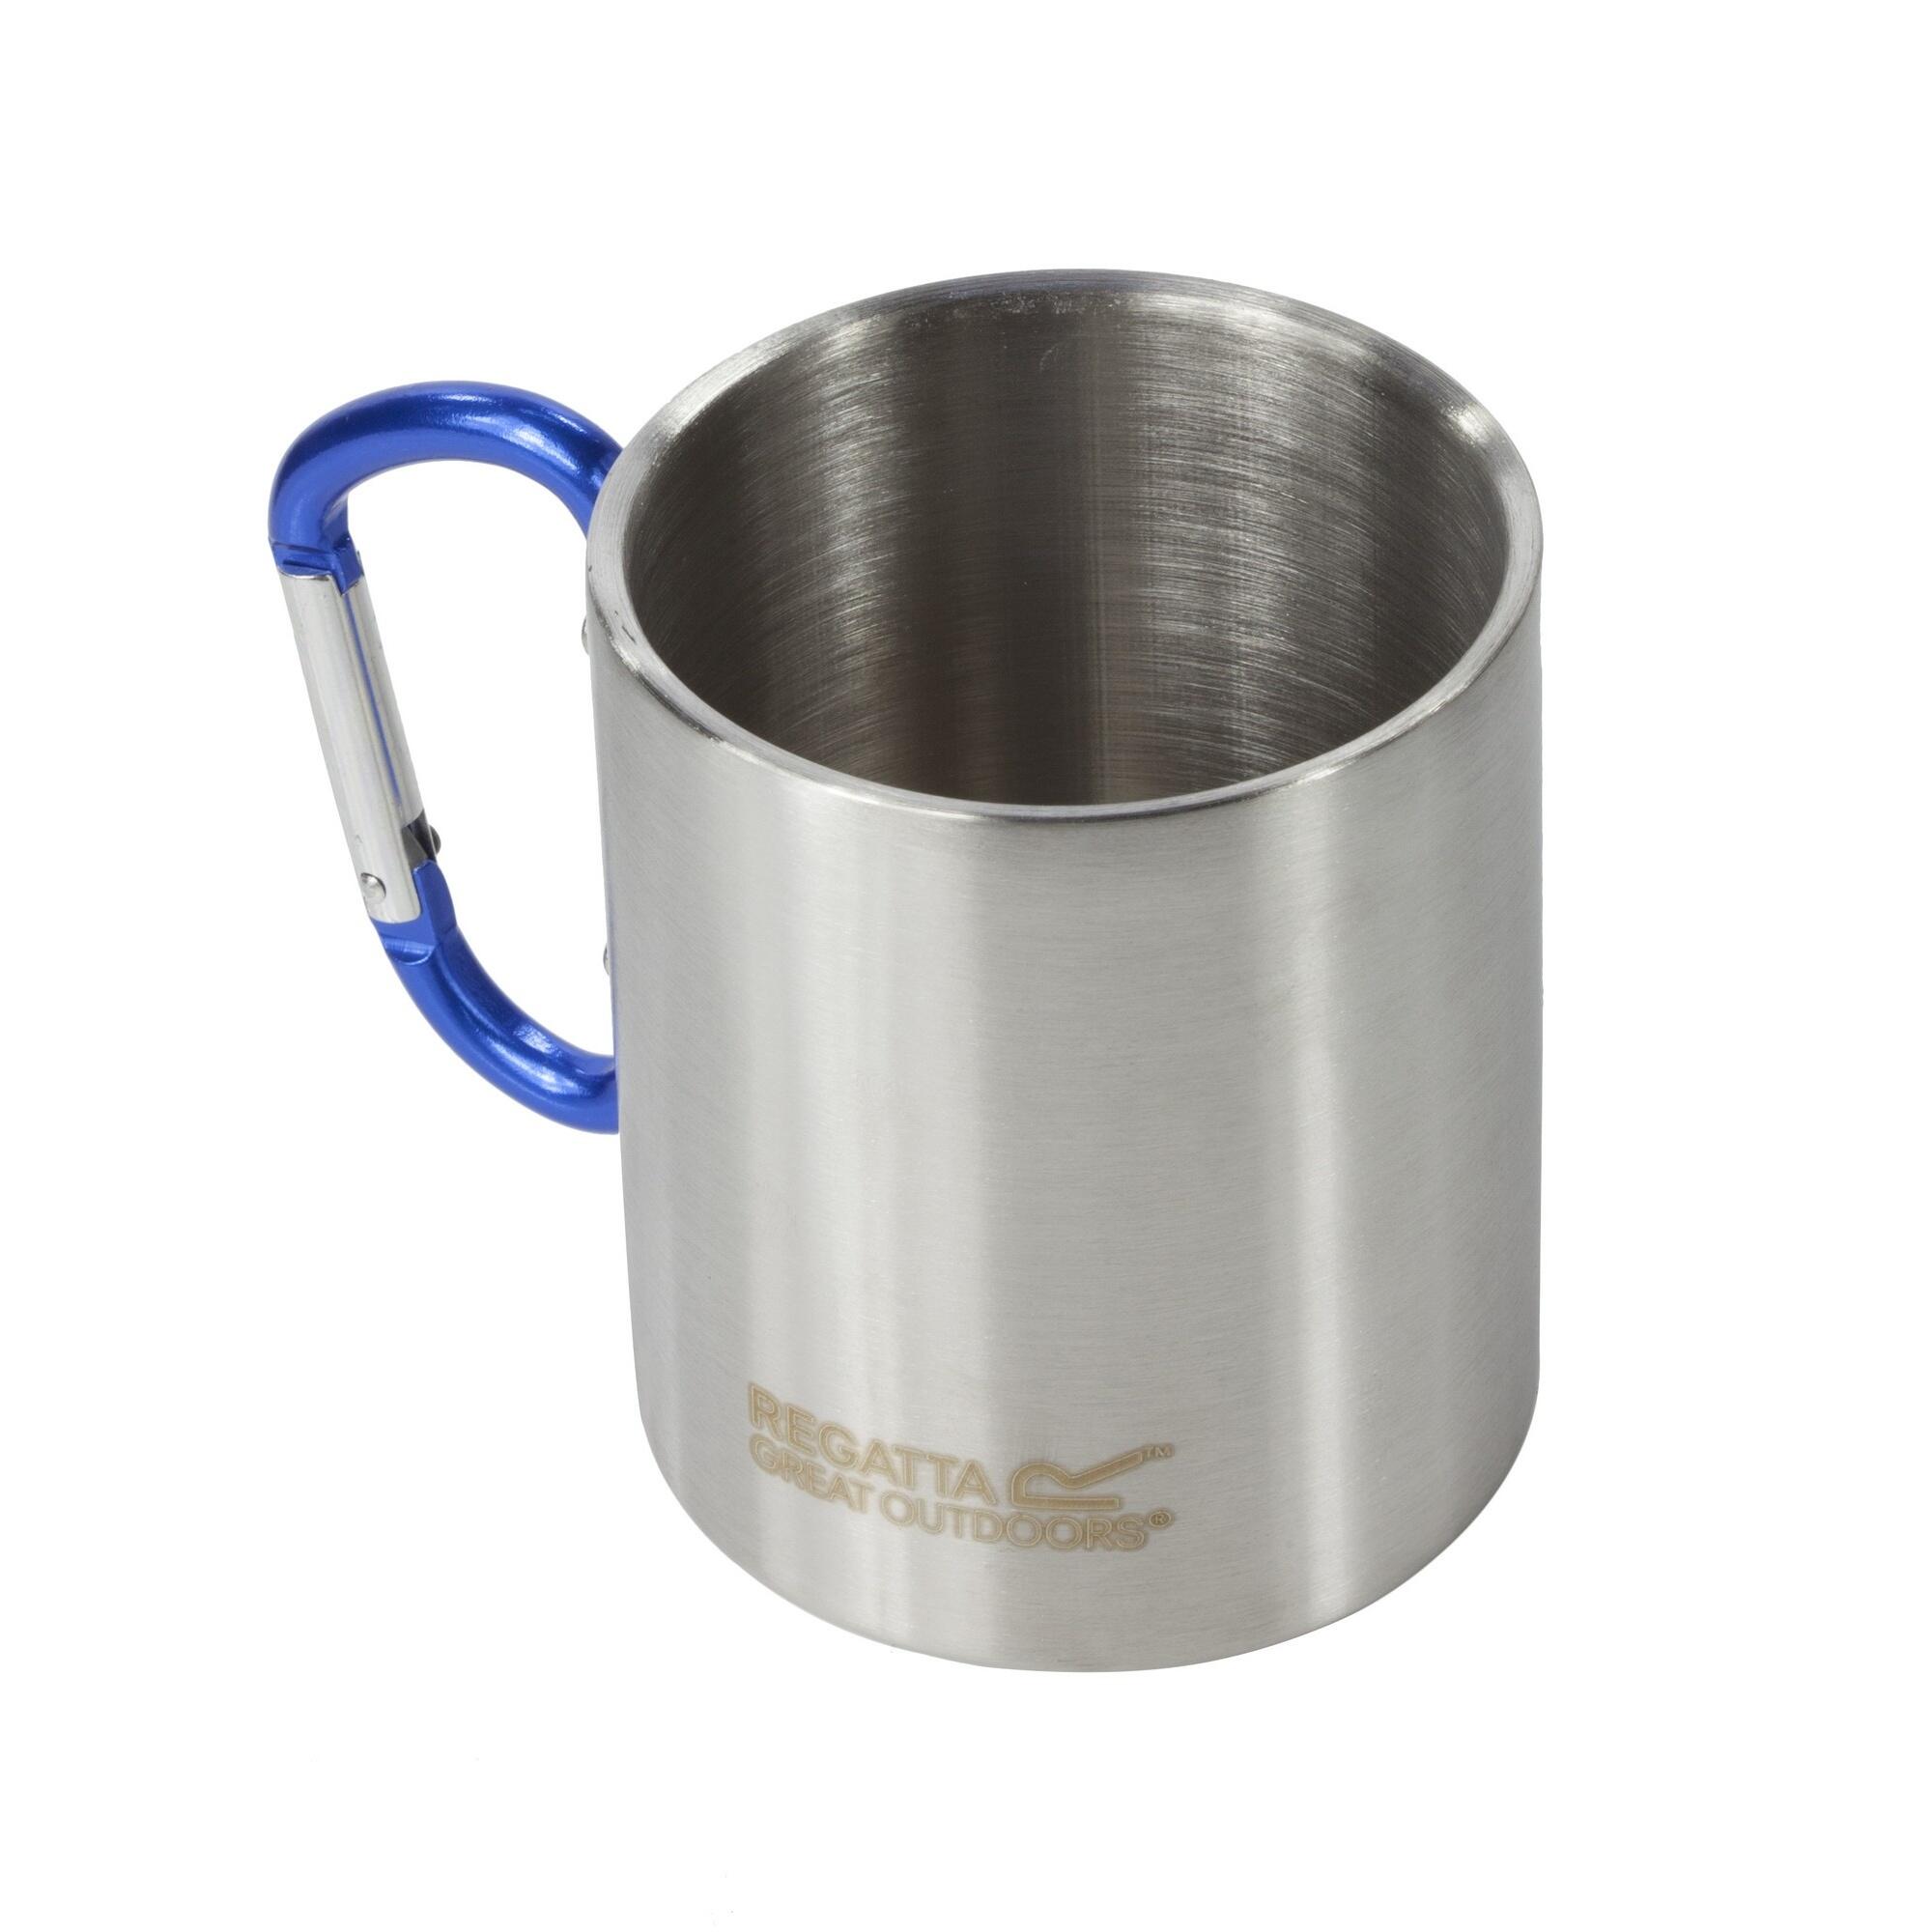 REGATTA Great Outdoors Steel Karabiner Mug/Cup (Silver)